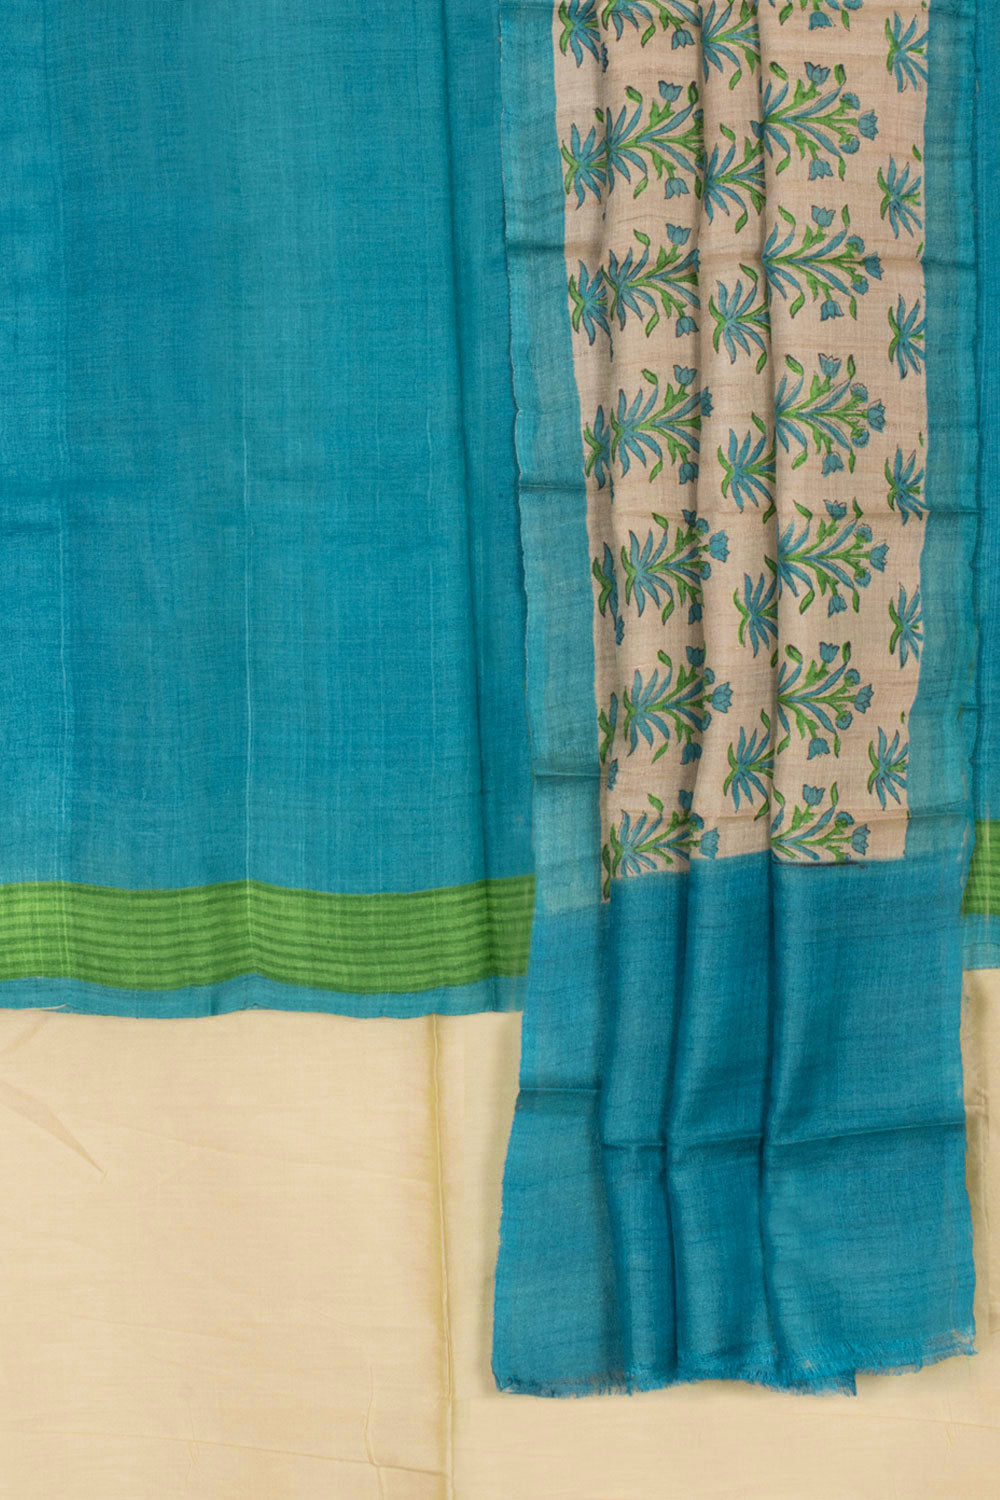 Hand Block Printed Tussar Silk 3-Piece Salwar Suit Material with Floral Motifs Dupatta